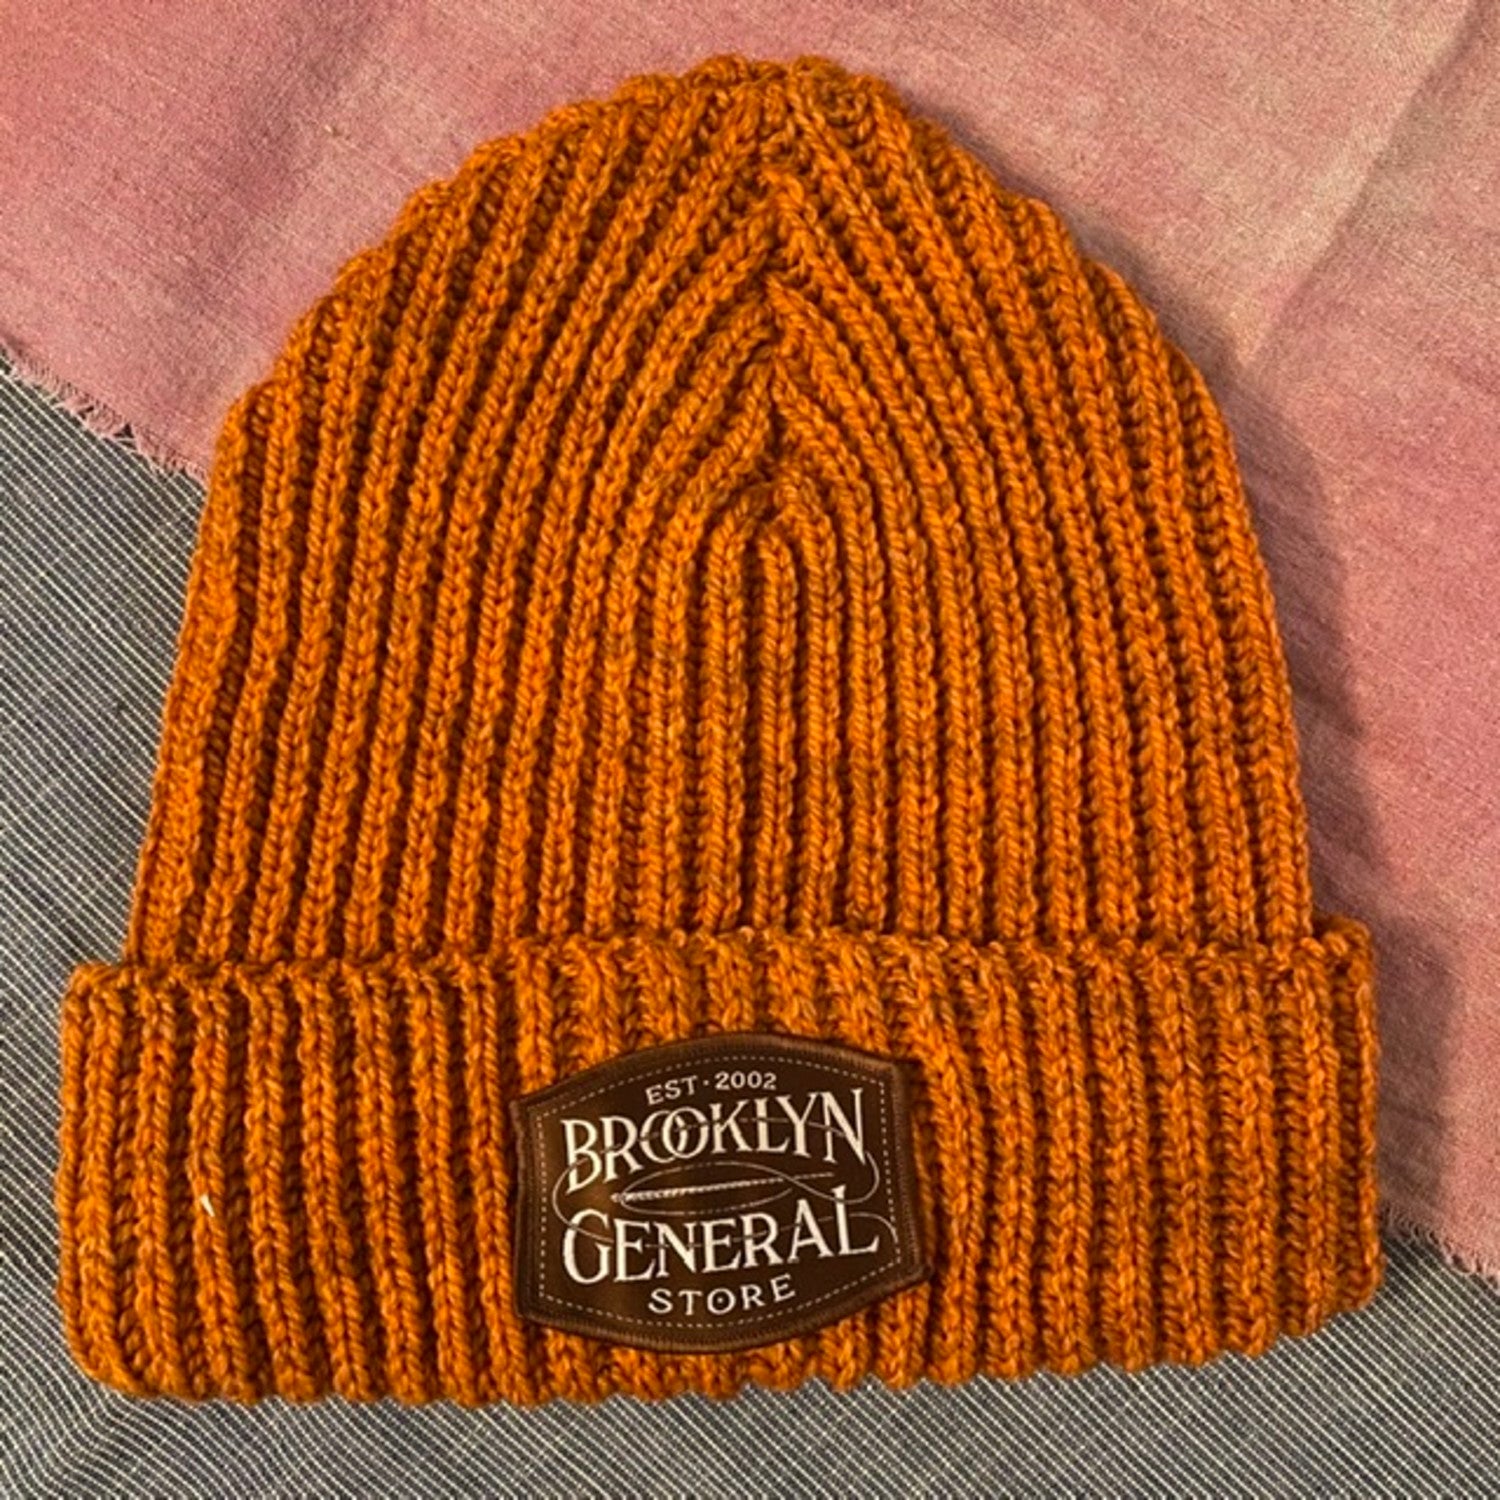 Susan Bates Quicksilver Crochet Hook – Brooklyn General Store